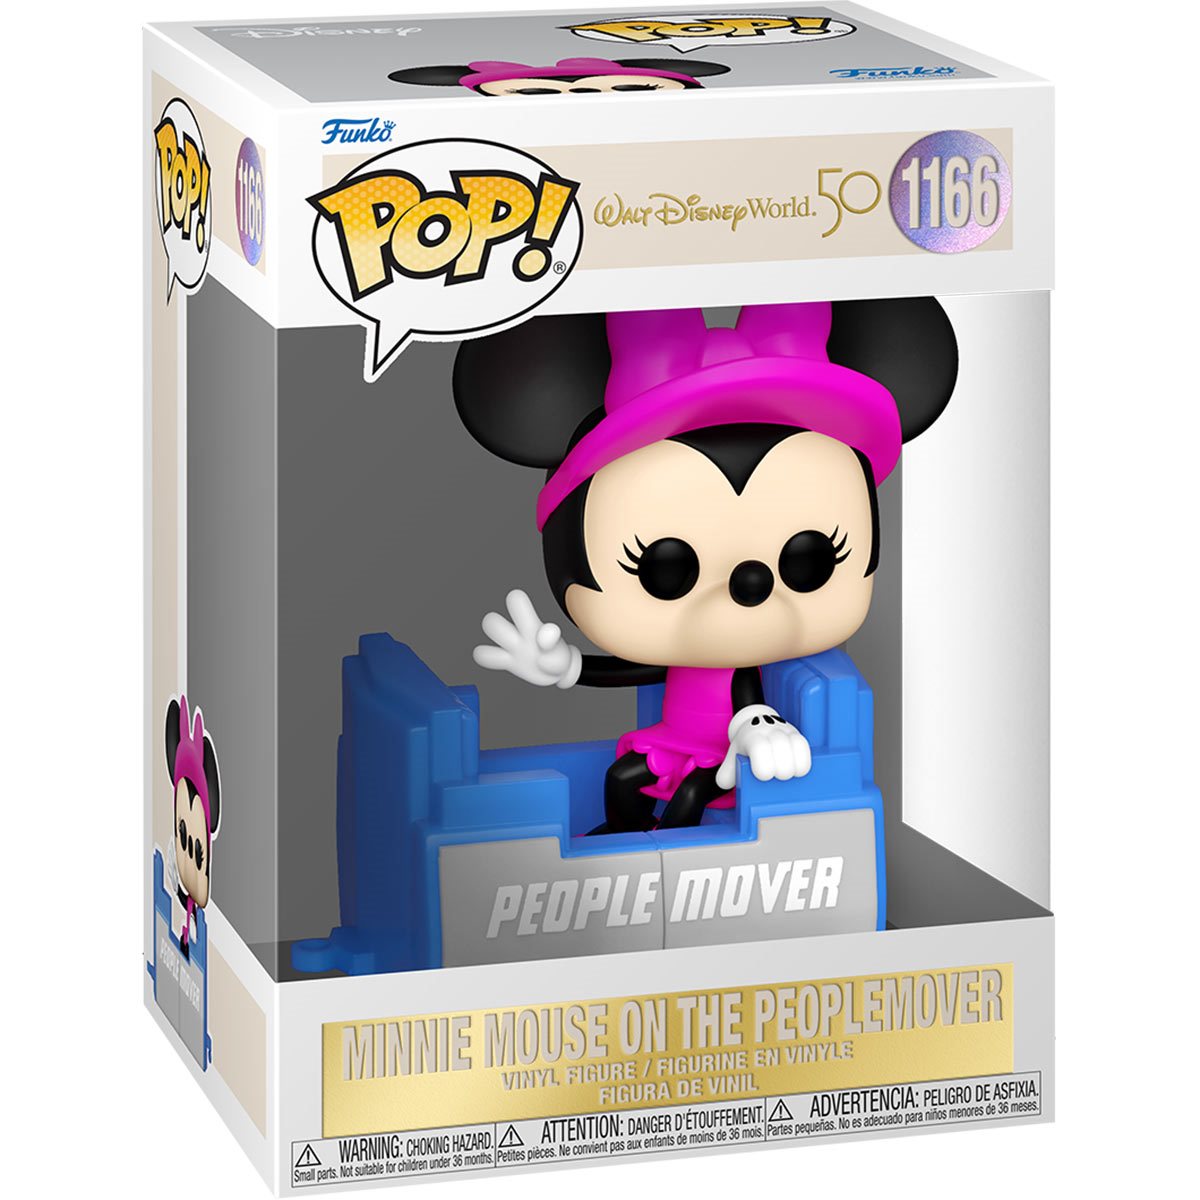 Walt Disney World: 50th Anniversary - Minnie Mouse on the People Mover Pop! Vinyl Figure (1166)